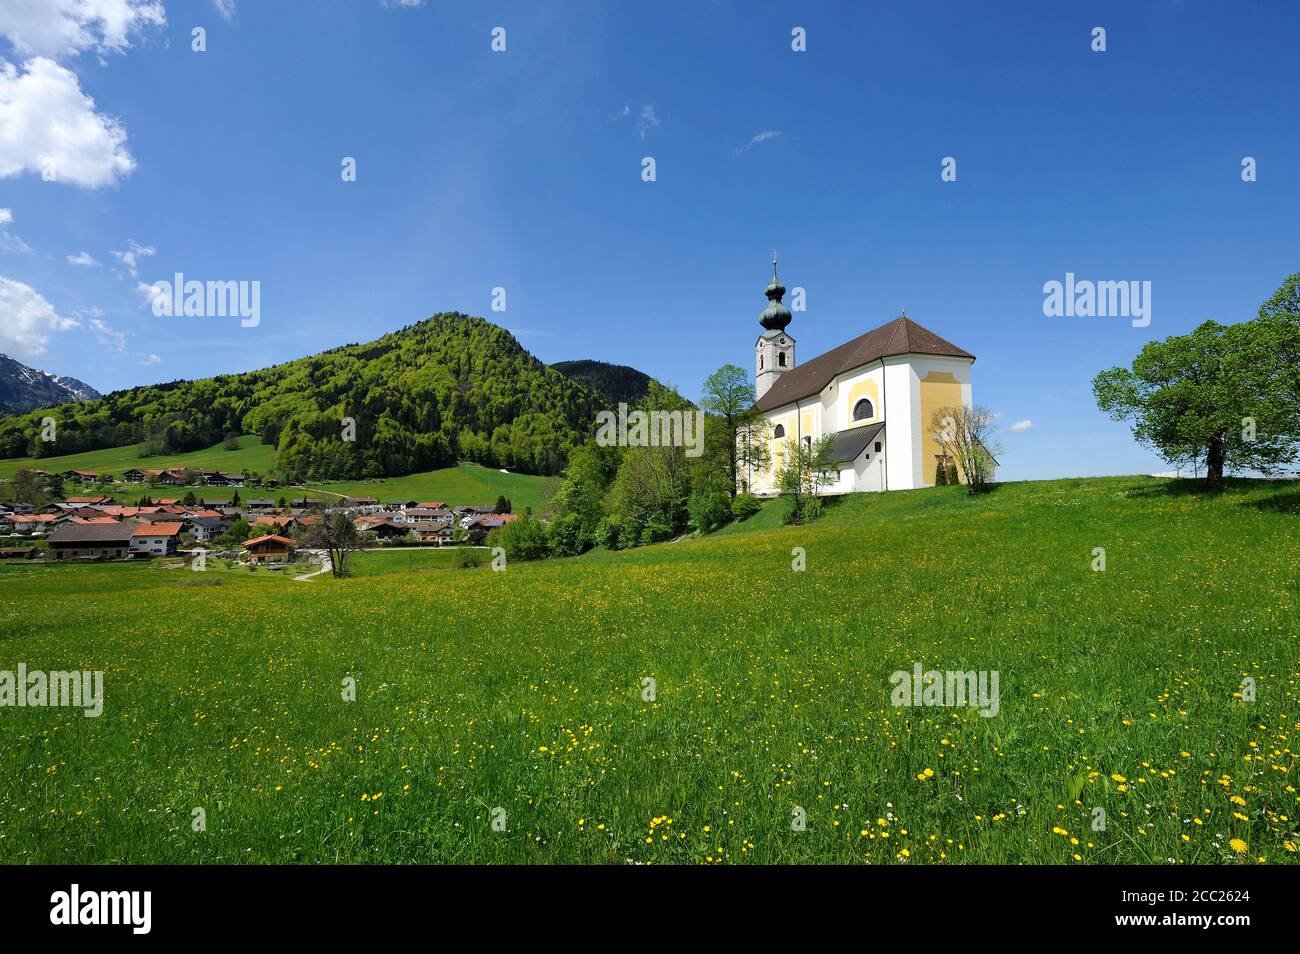 Germany, Bavaria, View of Parish Church Stock Photo